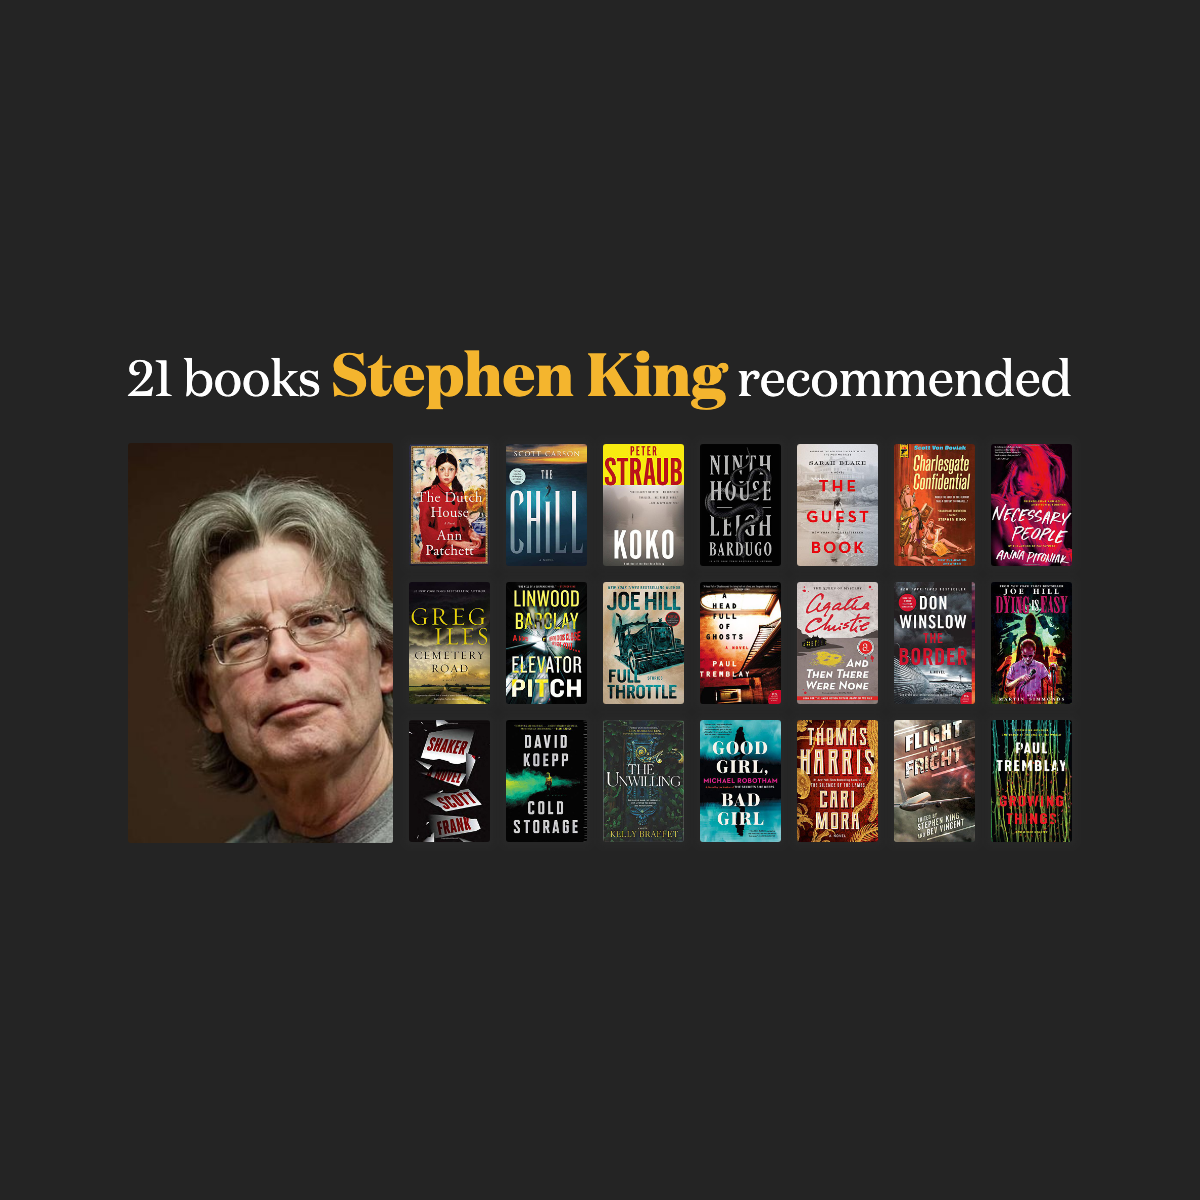 stephen king books free download pdf